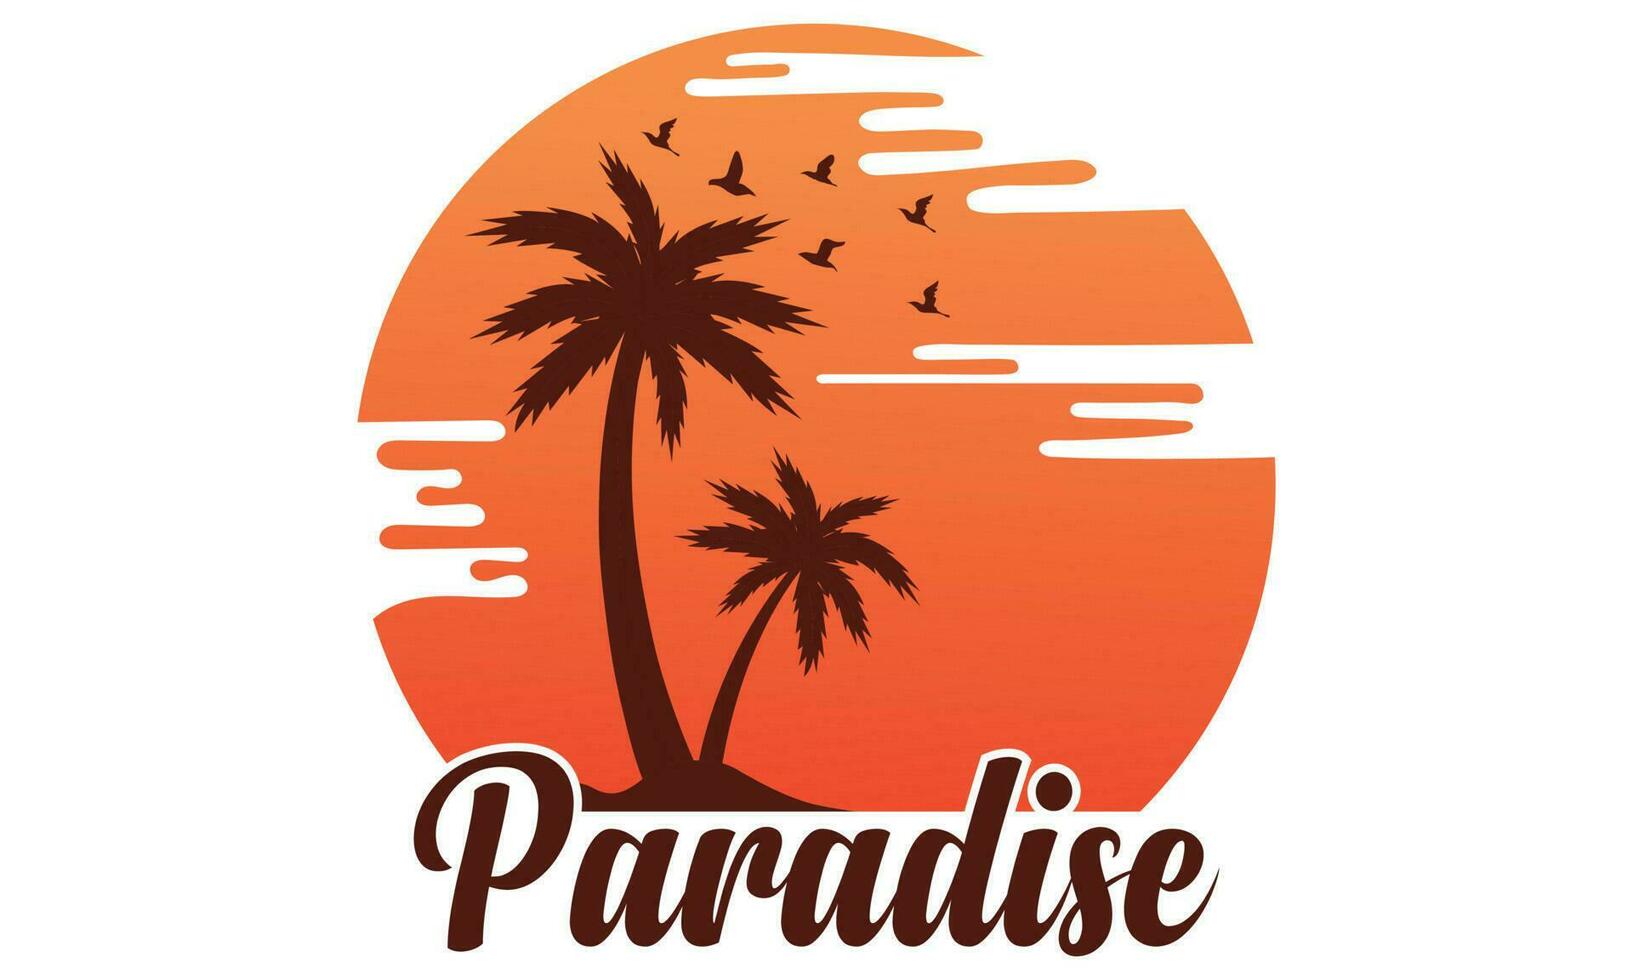 Hawaii paradise T-shirt design vector Illustration summer concept slogan t shirt. Vector illustration design for fashion graphics, t shirt prints etc.Beach shirt , surfing, time for surfing,